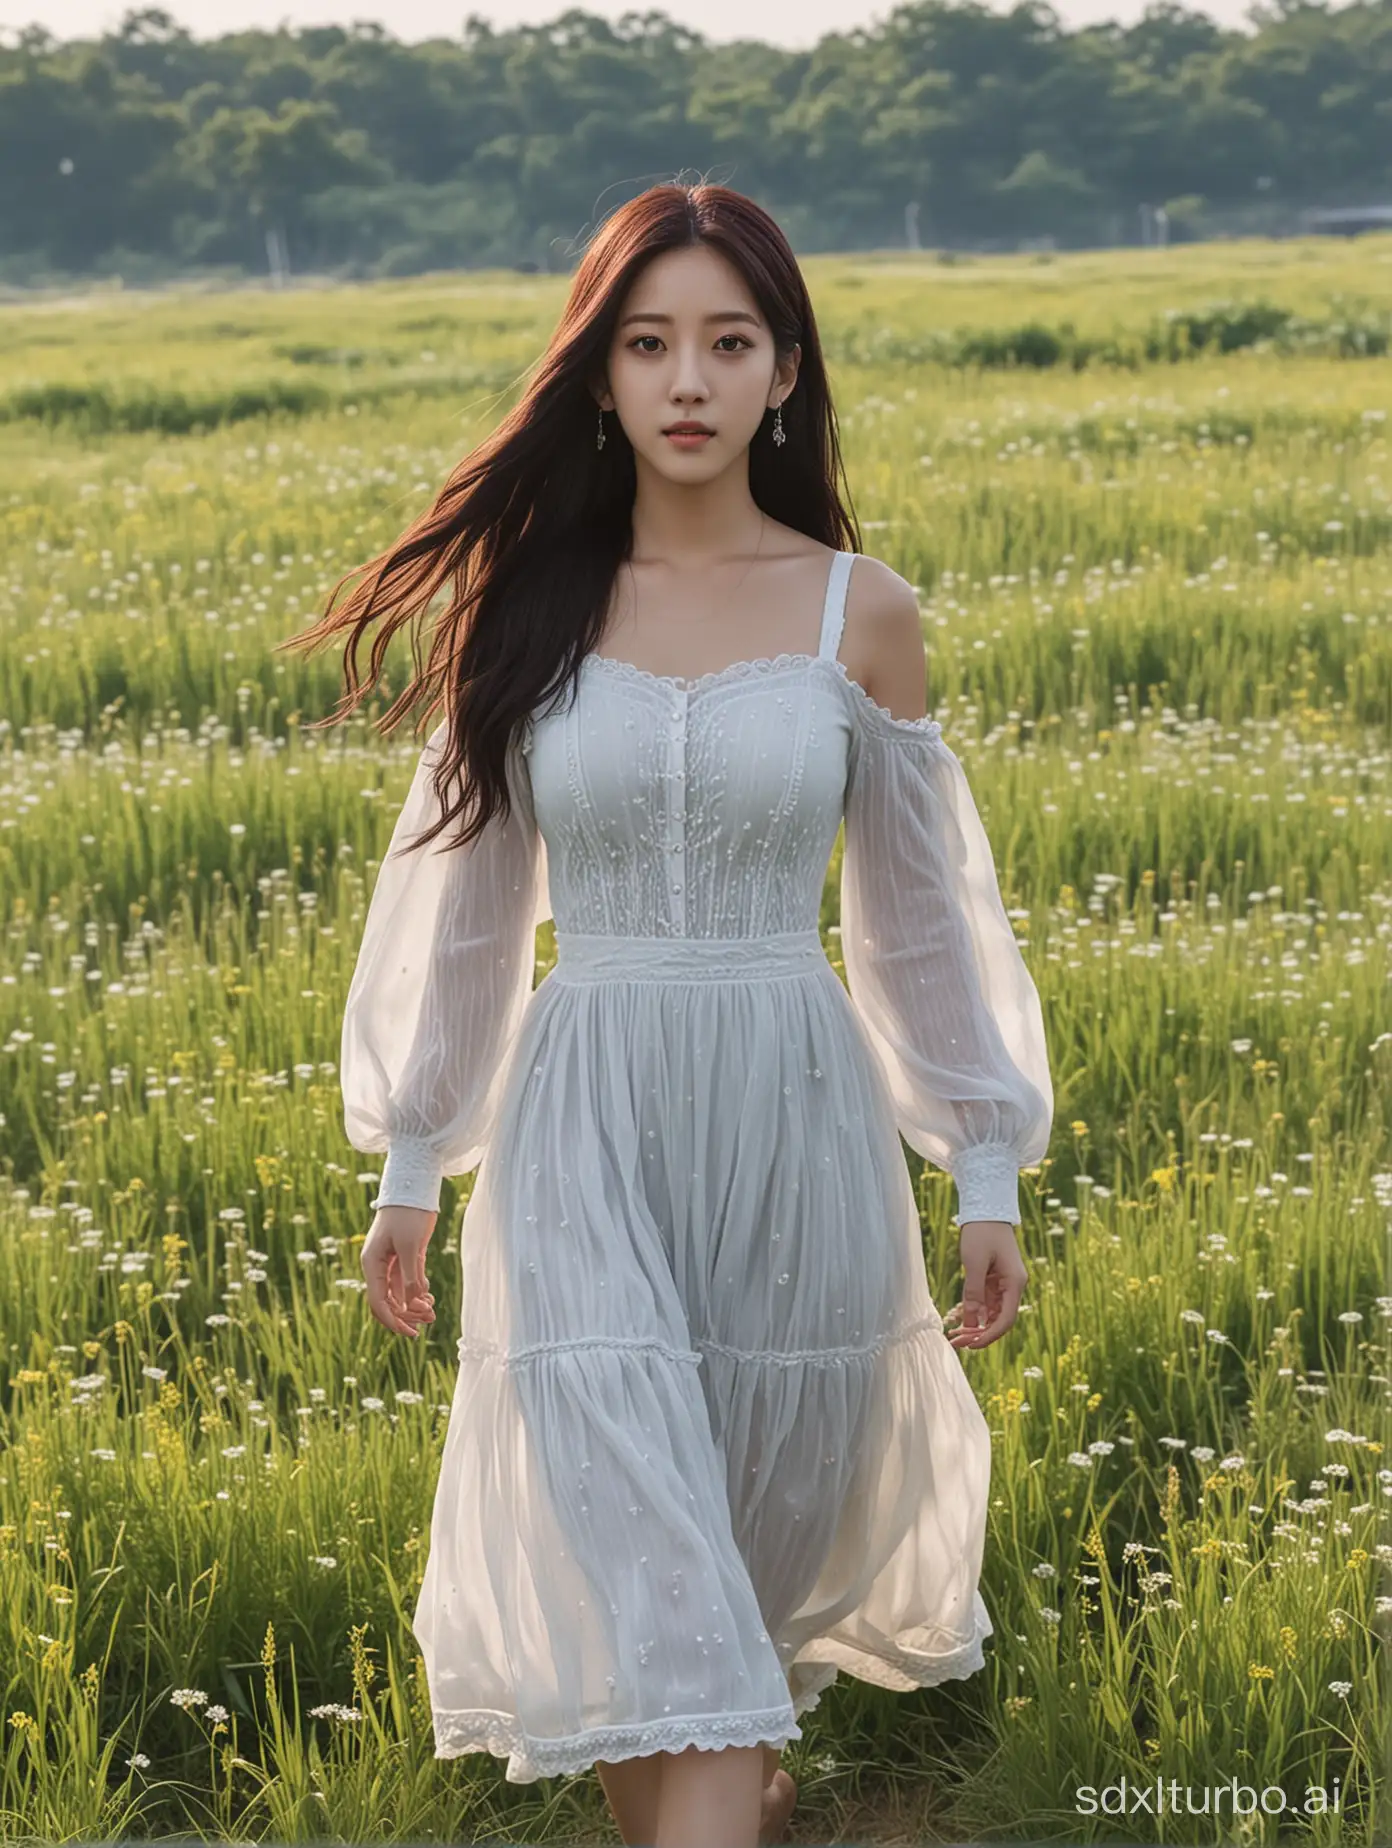 Beautiful Jisoo walking through a field, highly detailed,